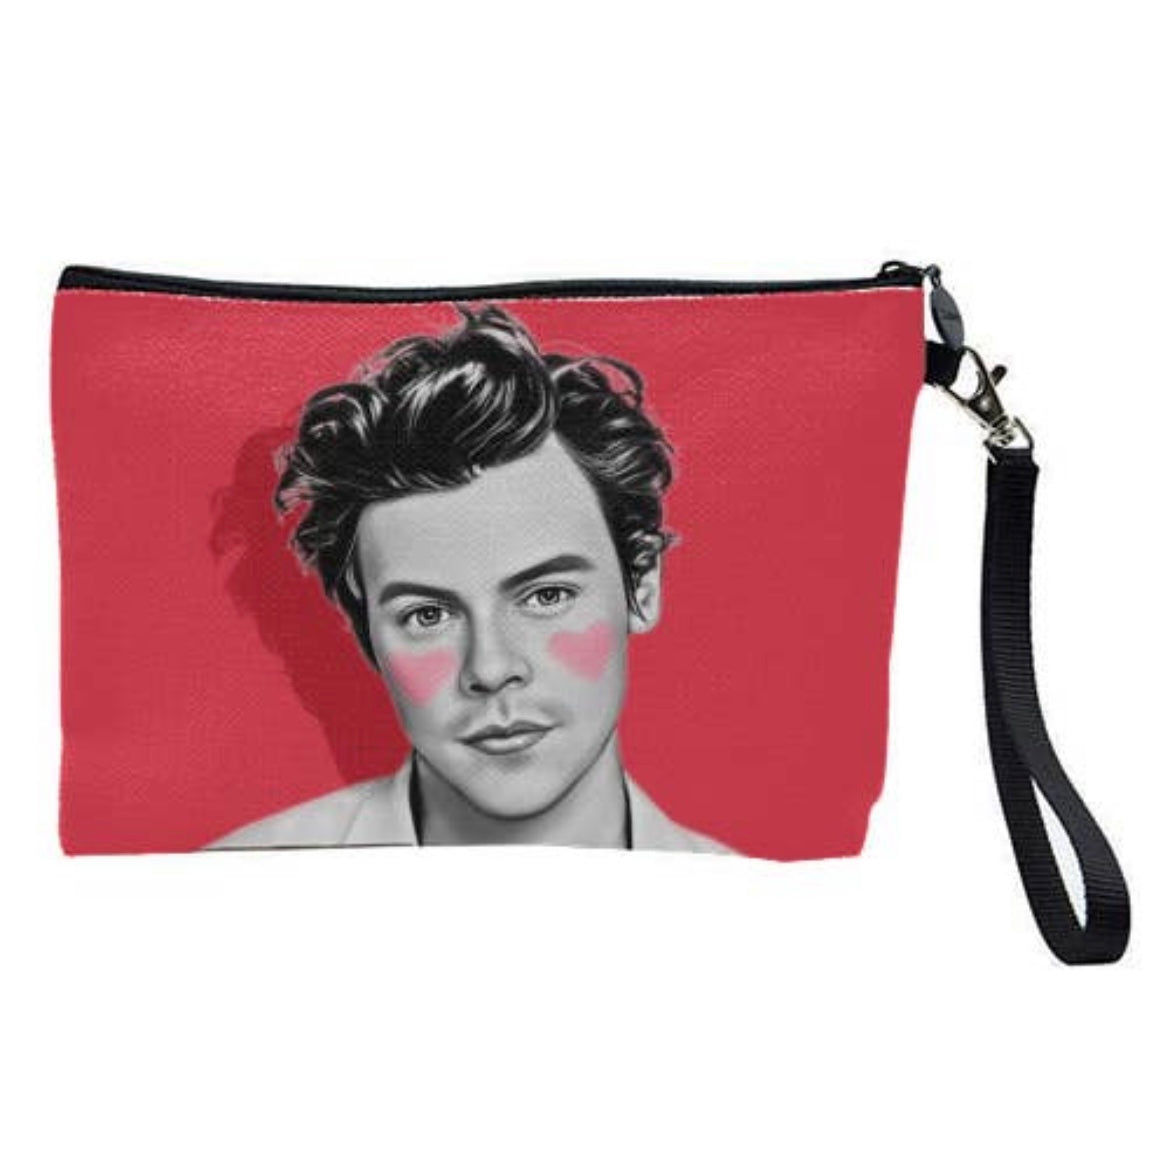 Art Wow - Cosmetic Bag ‘I Heart Harry’